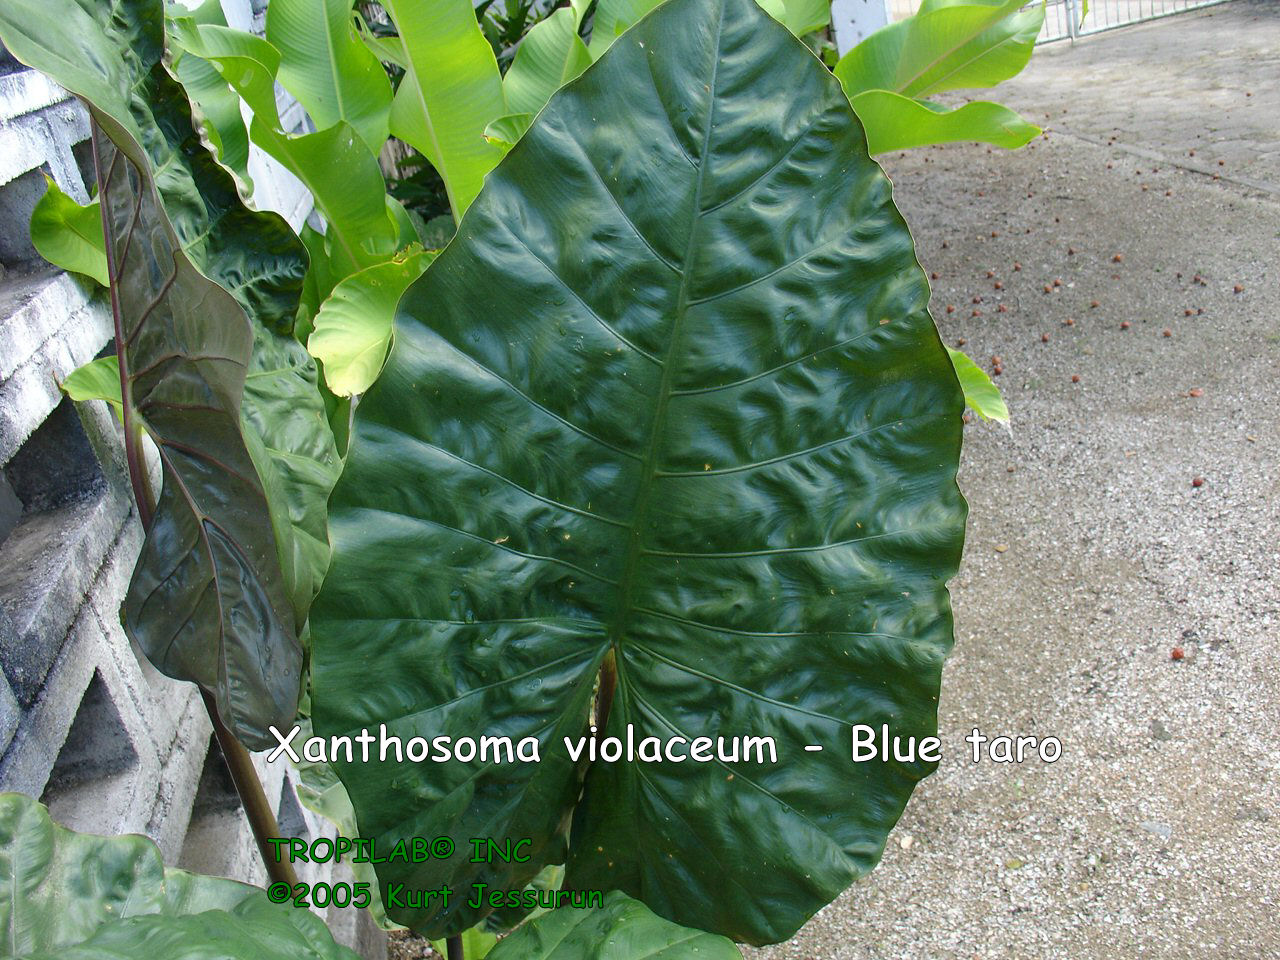 Xanthosoma violaceum - Blue taro